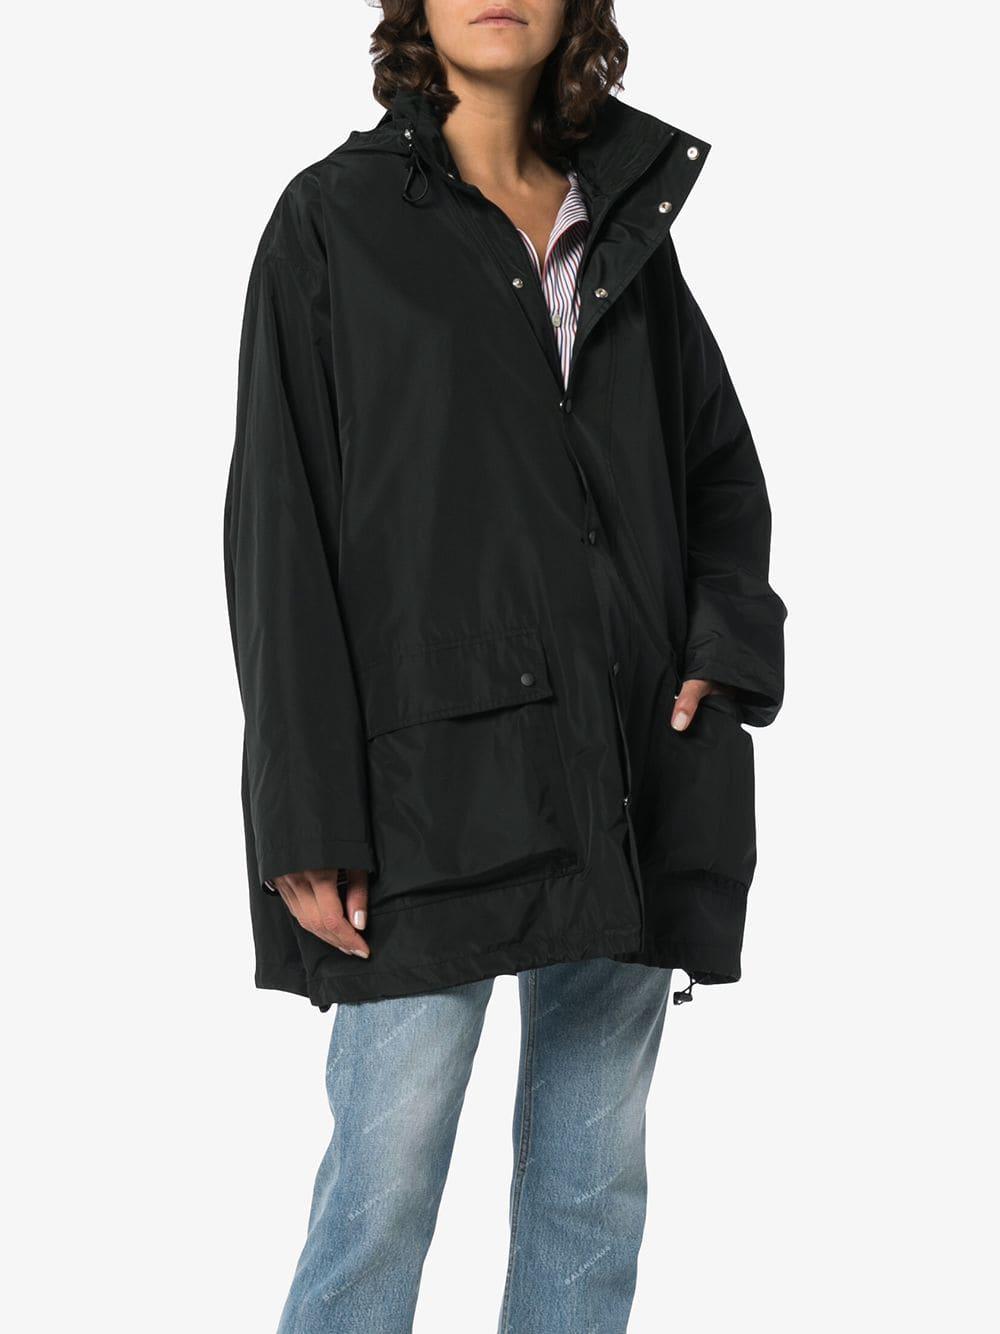 Balenciaga Synthetic Long Print Hooded Windbreaker Jacket in Black | Lyst